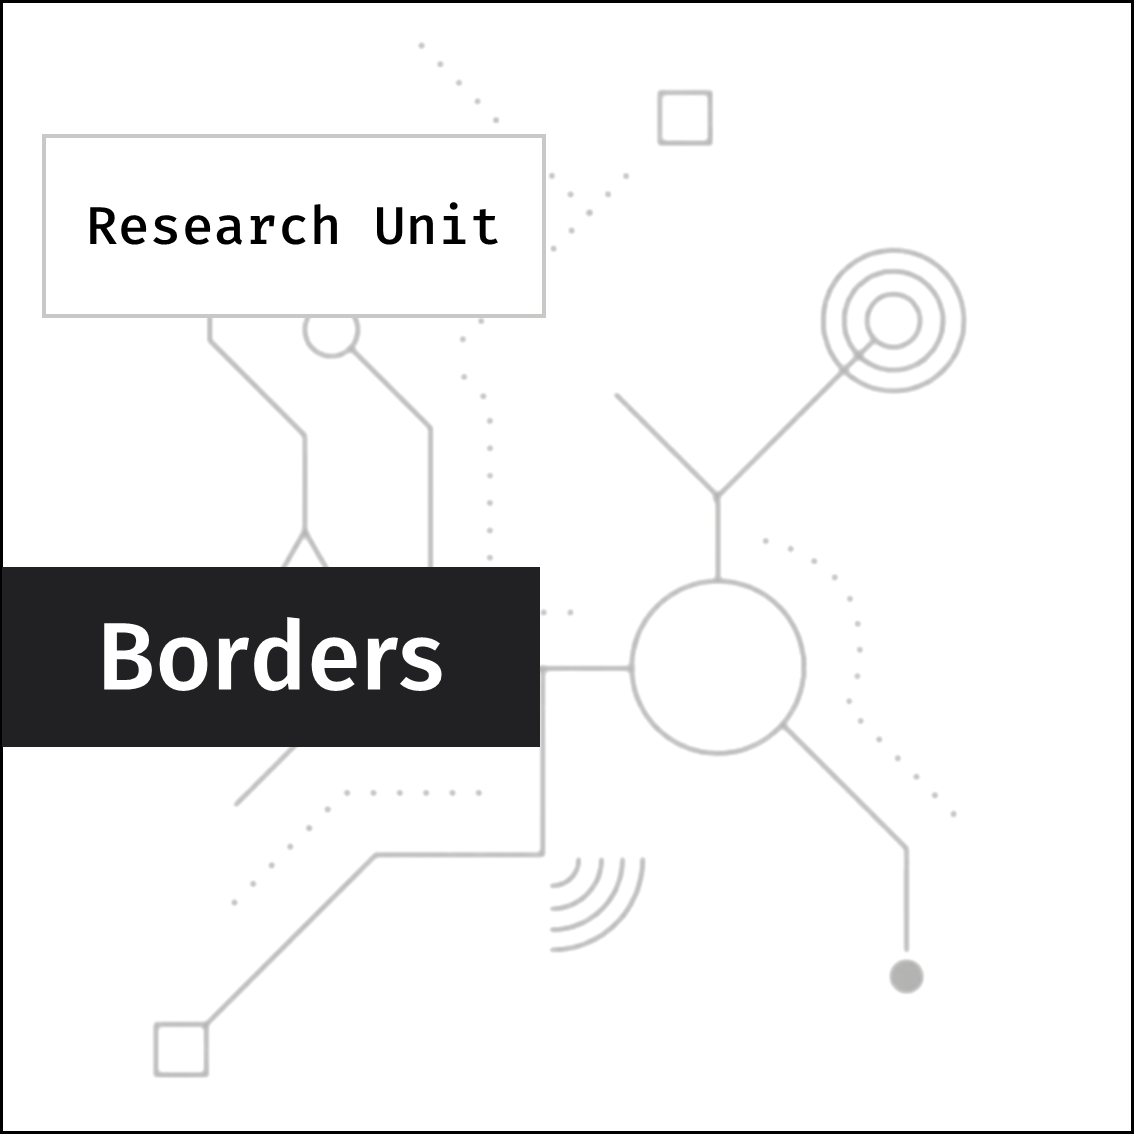 Research Unit: Borders